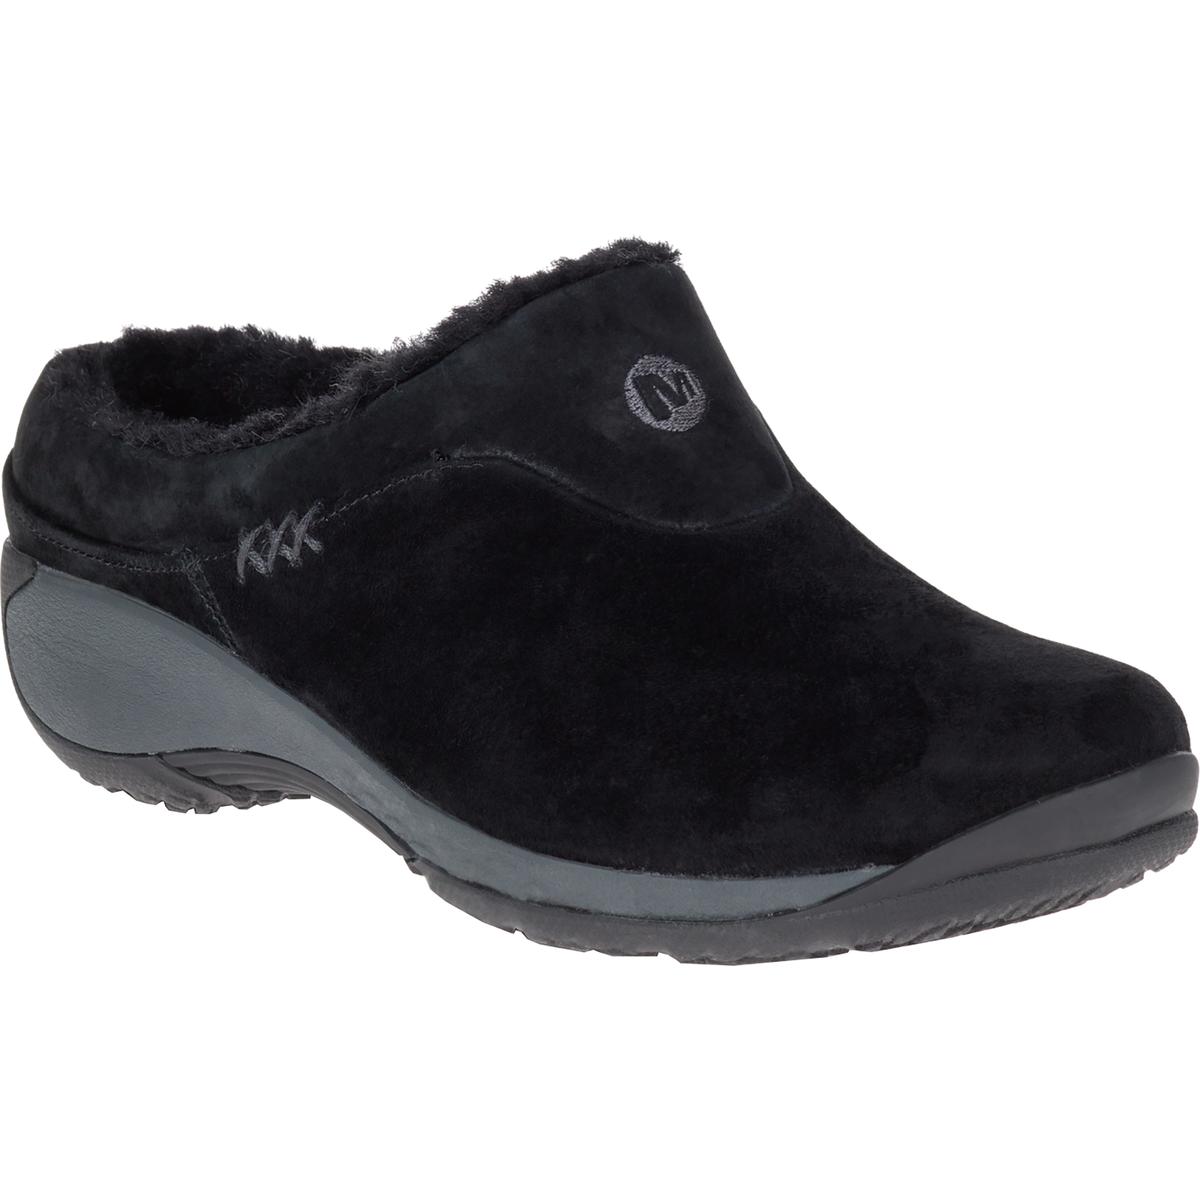 Merrell Womens Encore Q2 Ice Black Suede Clogs Shoes 8 Medium (B,M ...